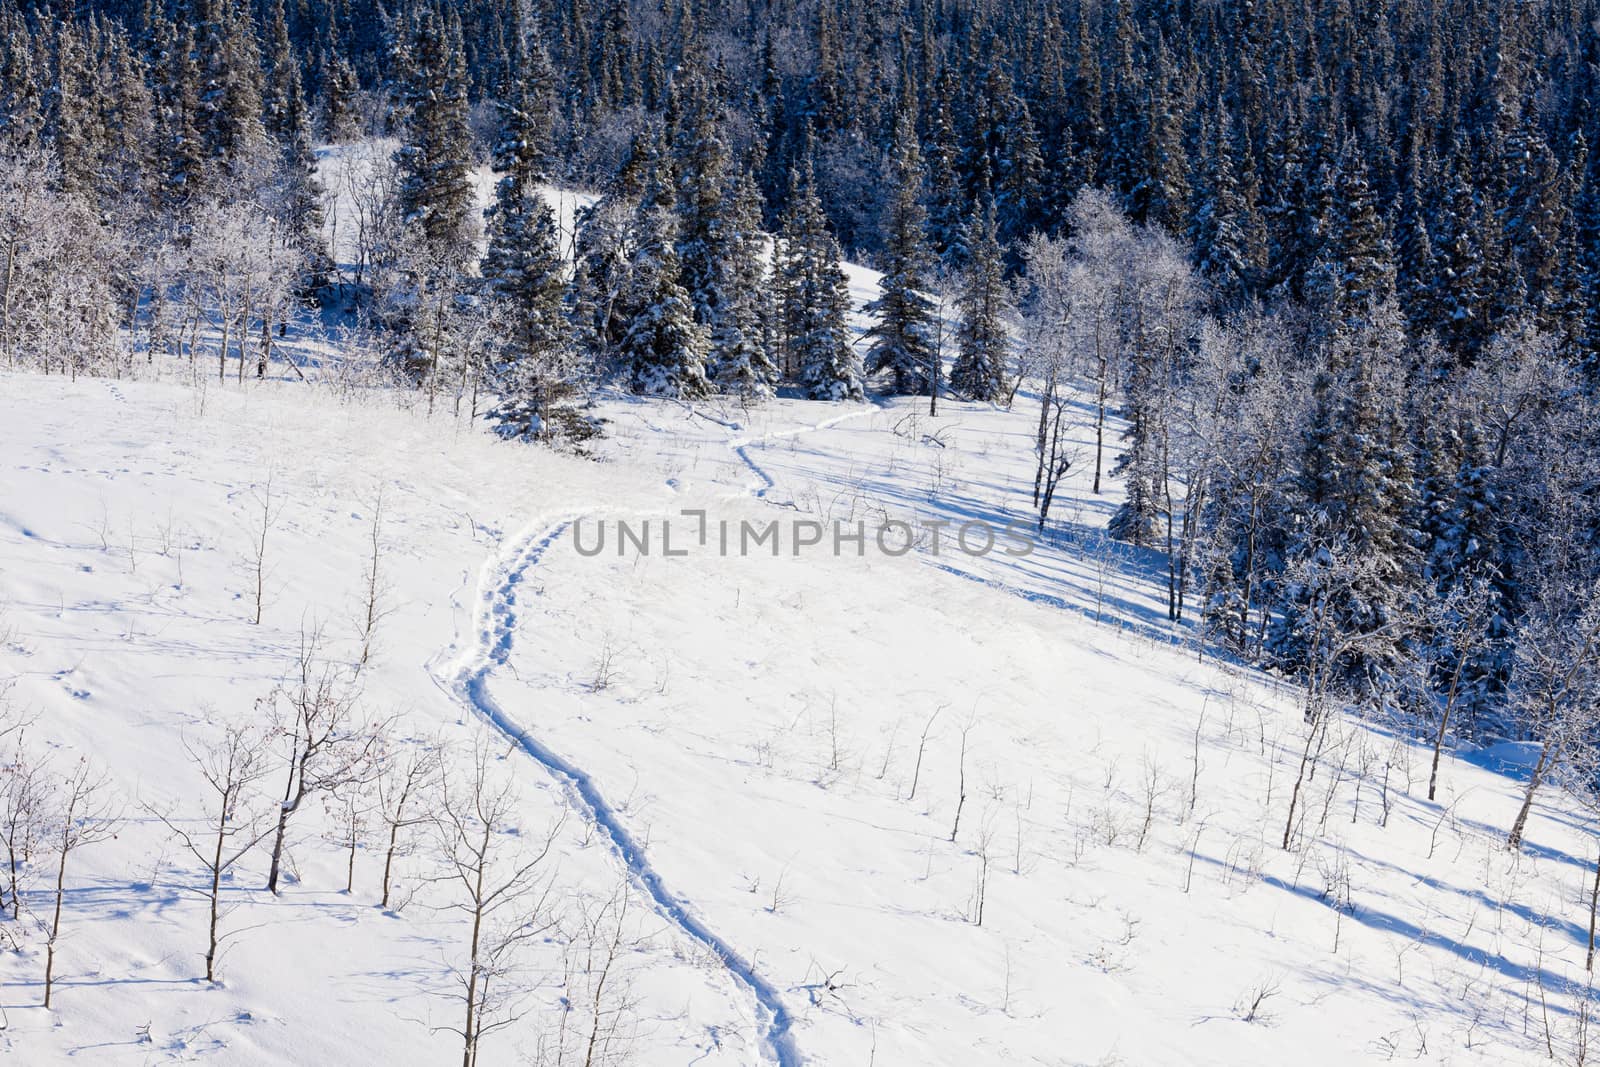 Snowy winter wonderland taiga snowshoe track scene by PiLens